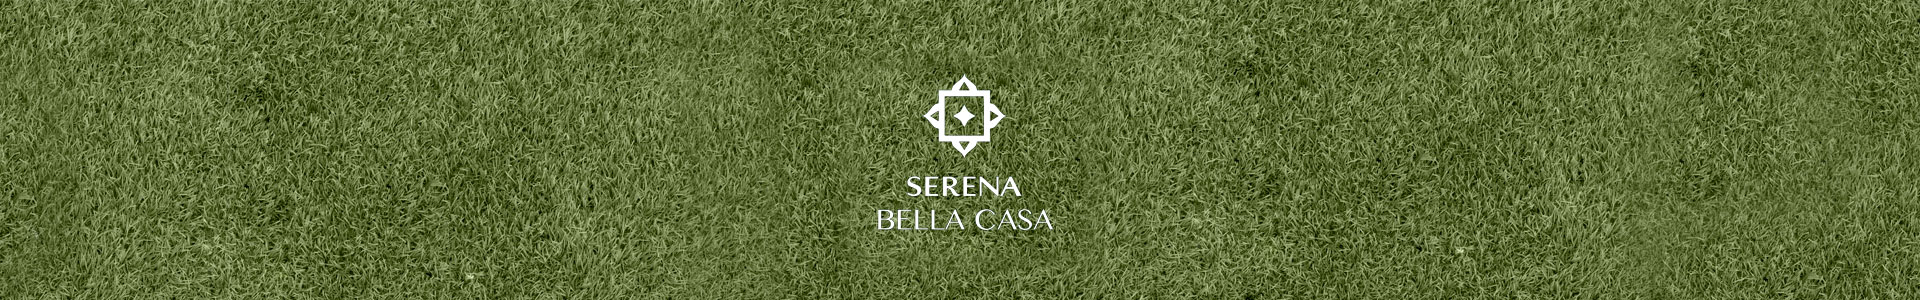 Serena Bella Casa Master Plan